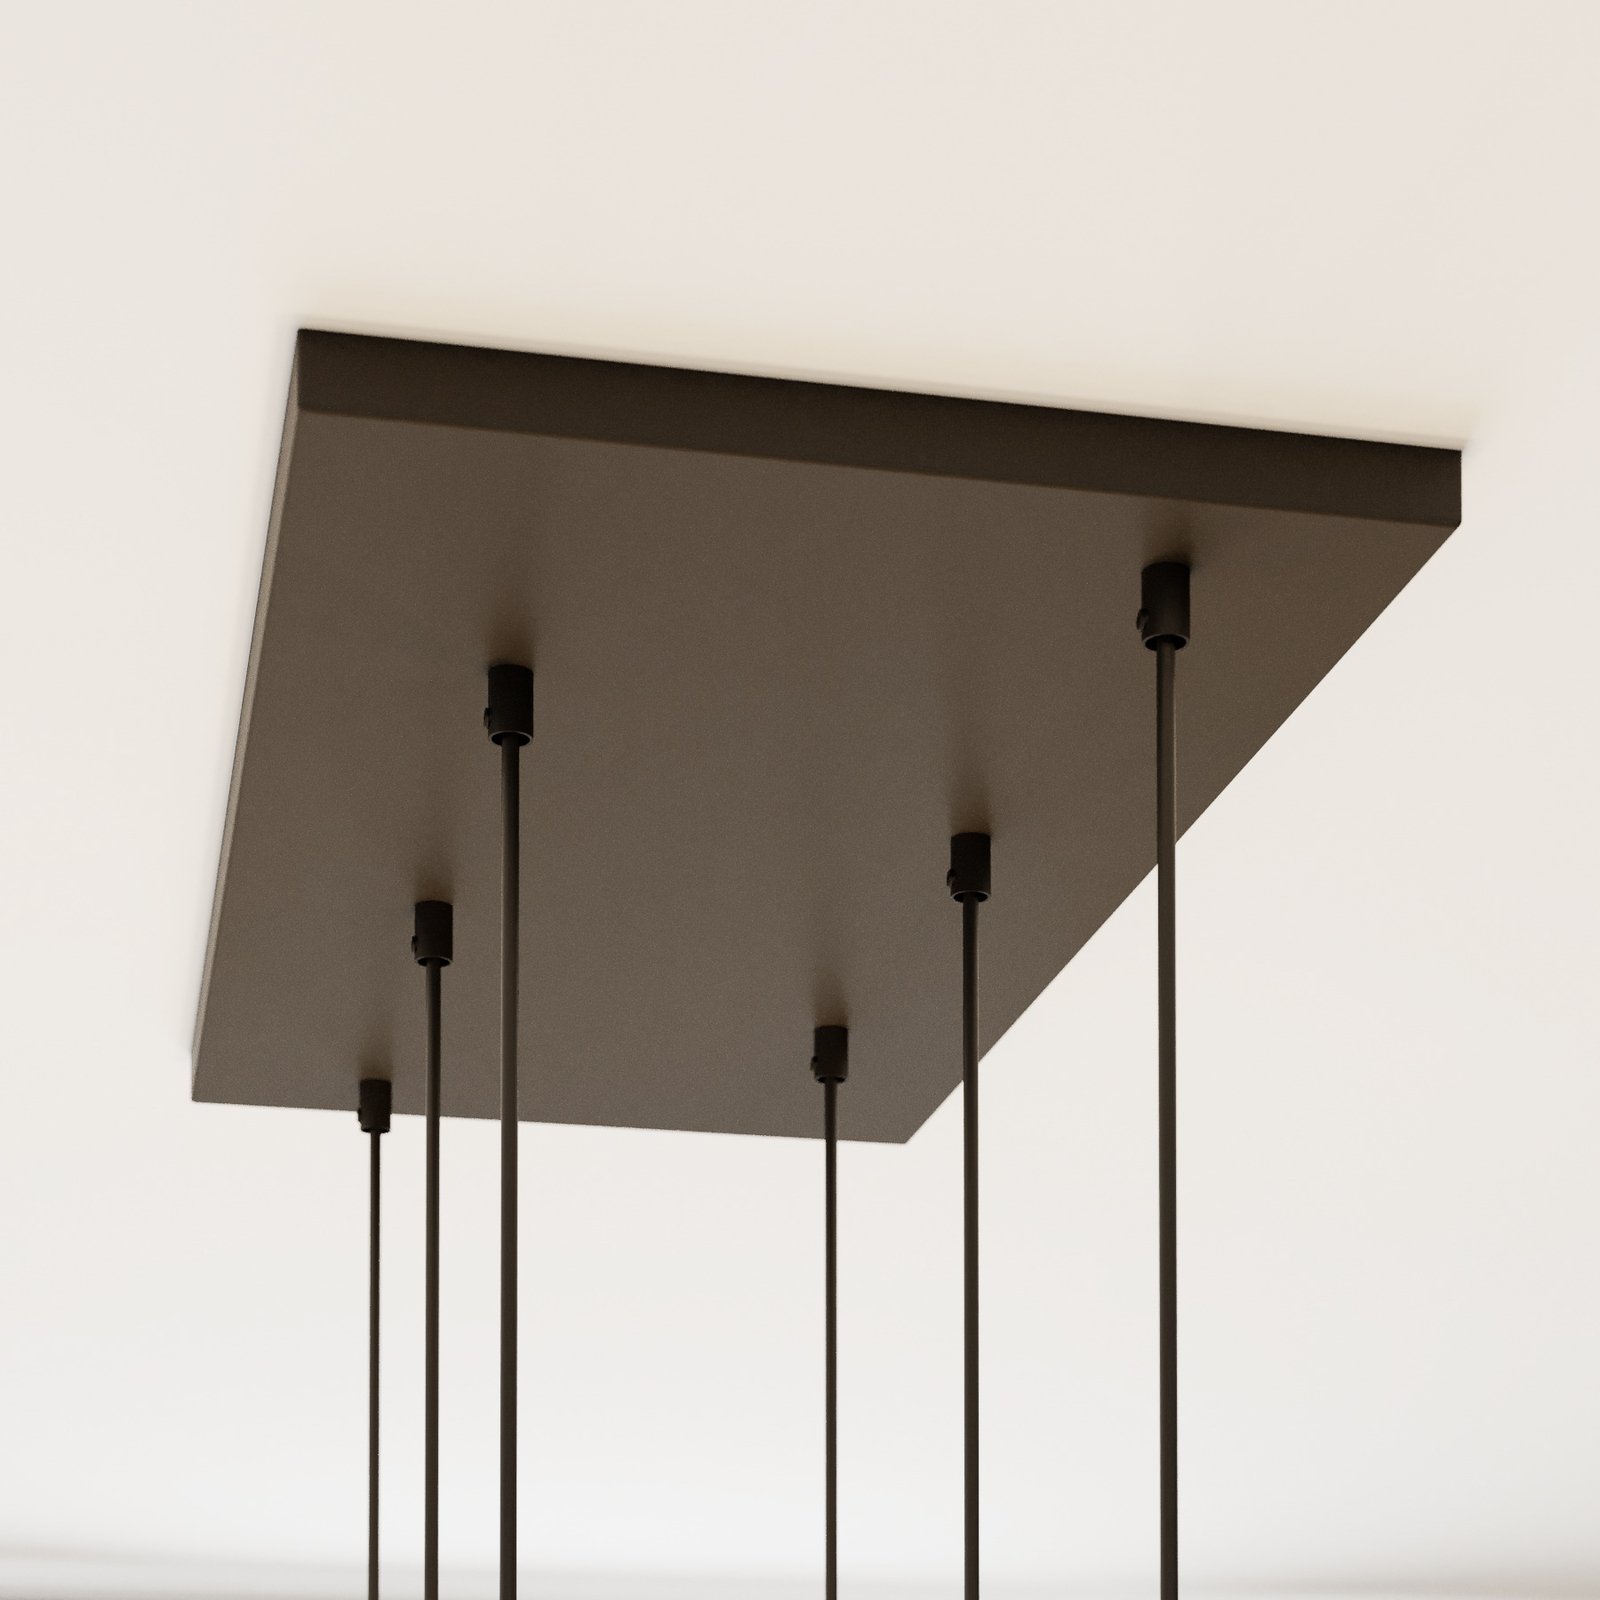 Cubus hanglamp, 6-lamps, helder/honing/bruin, glas, E27